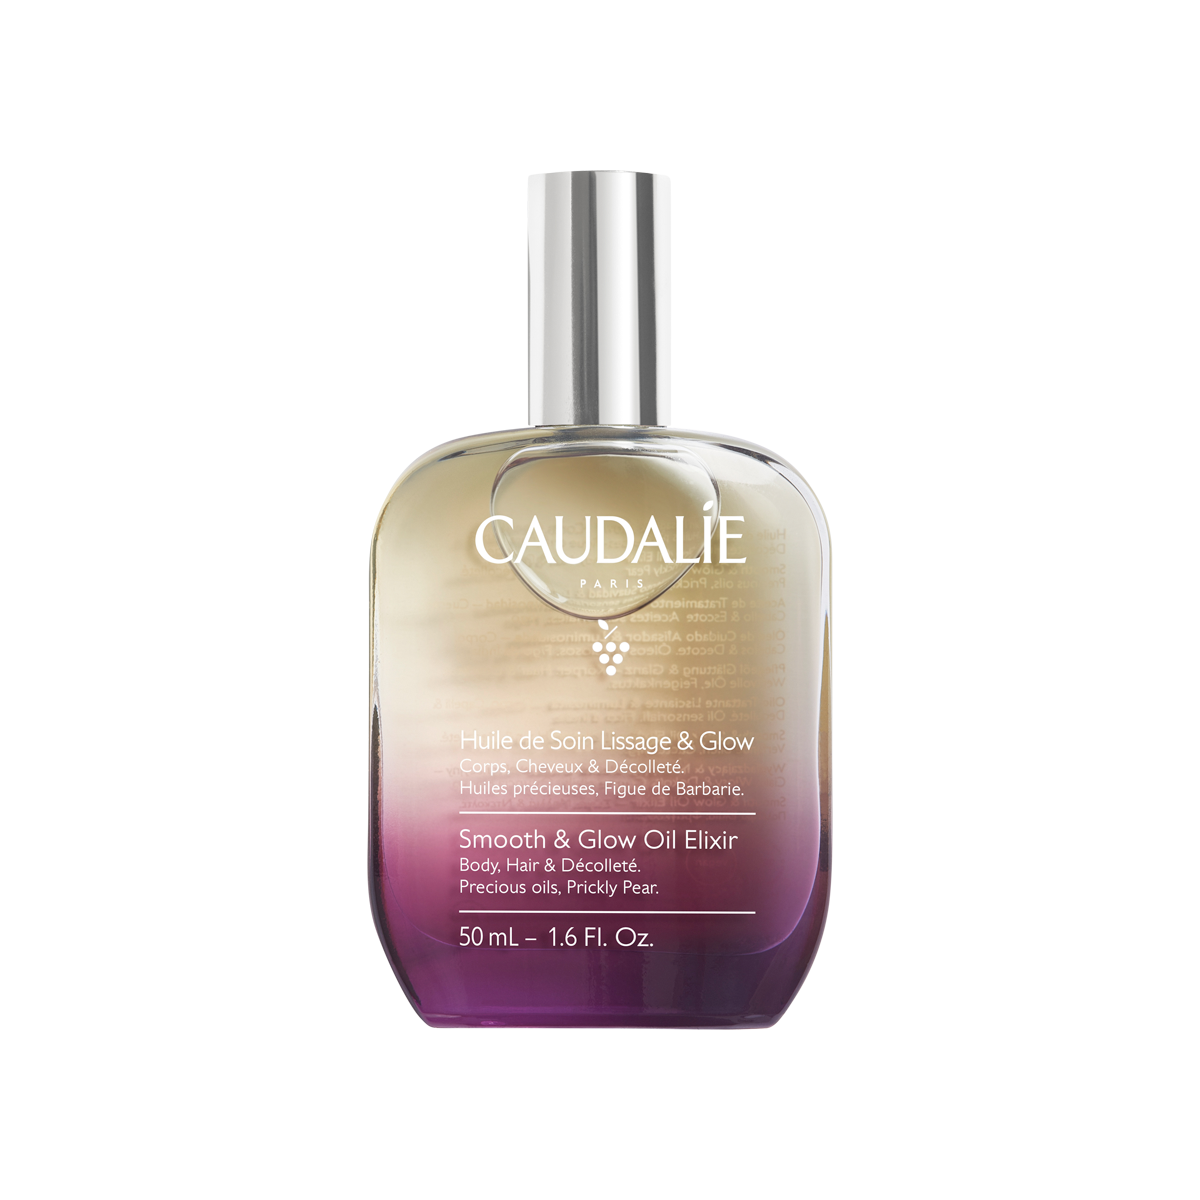 Caudalie - Smooth & Glow Oil Elixir